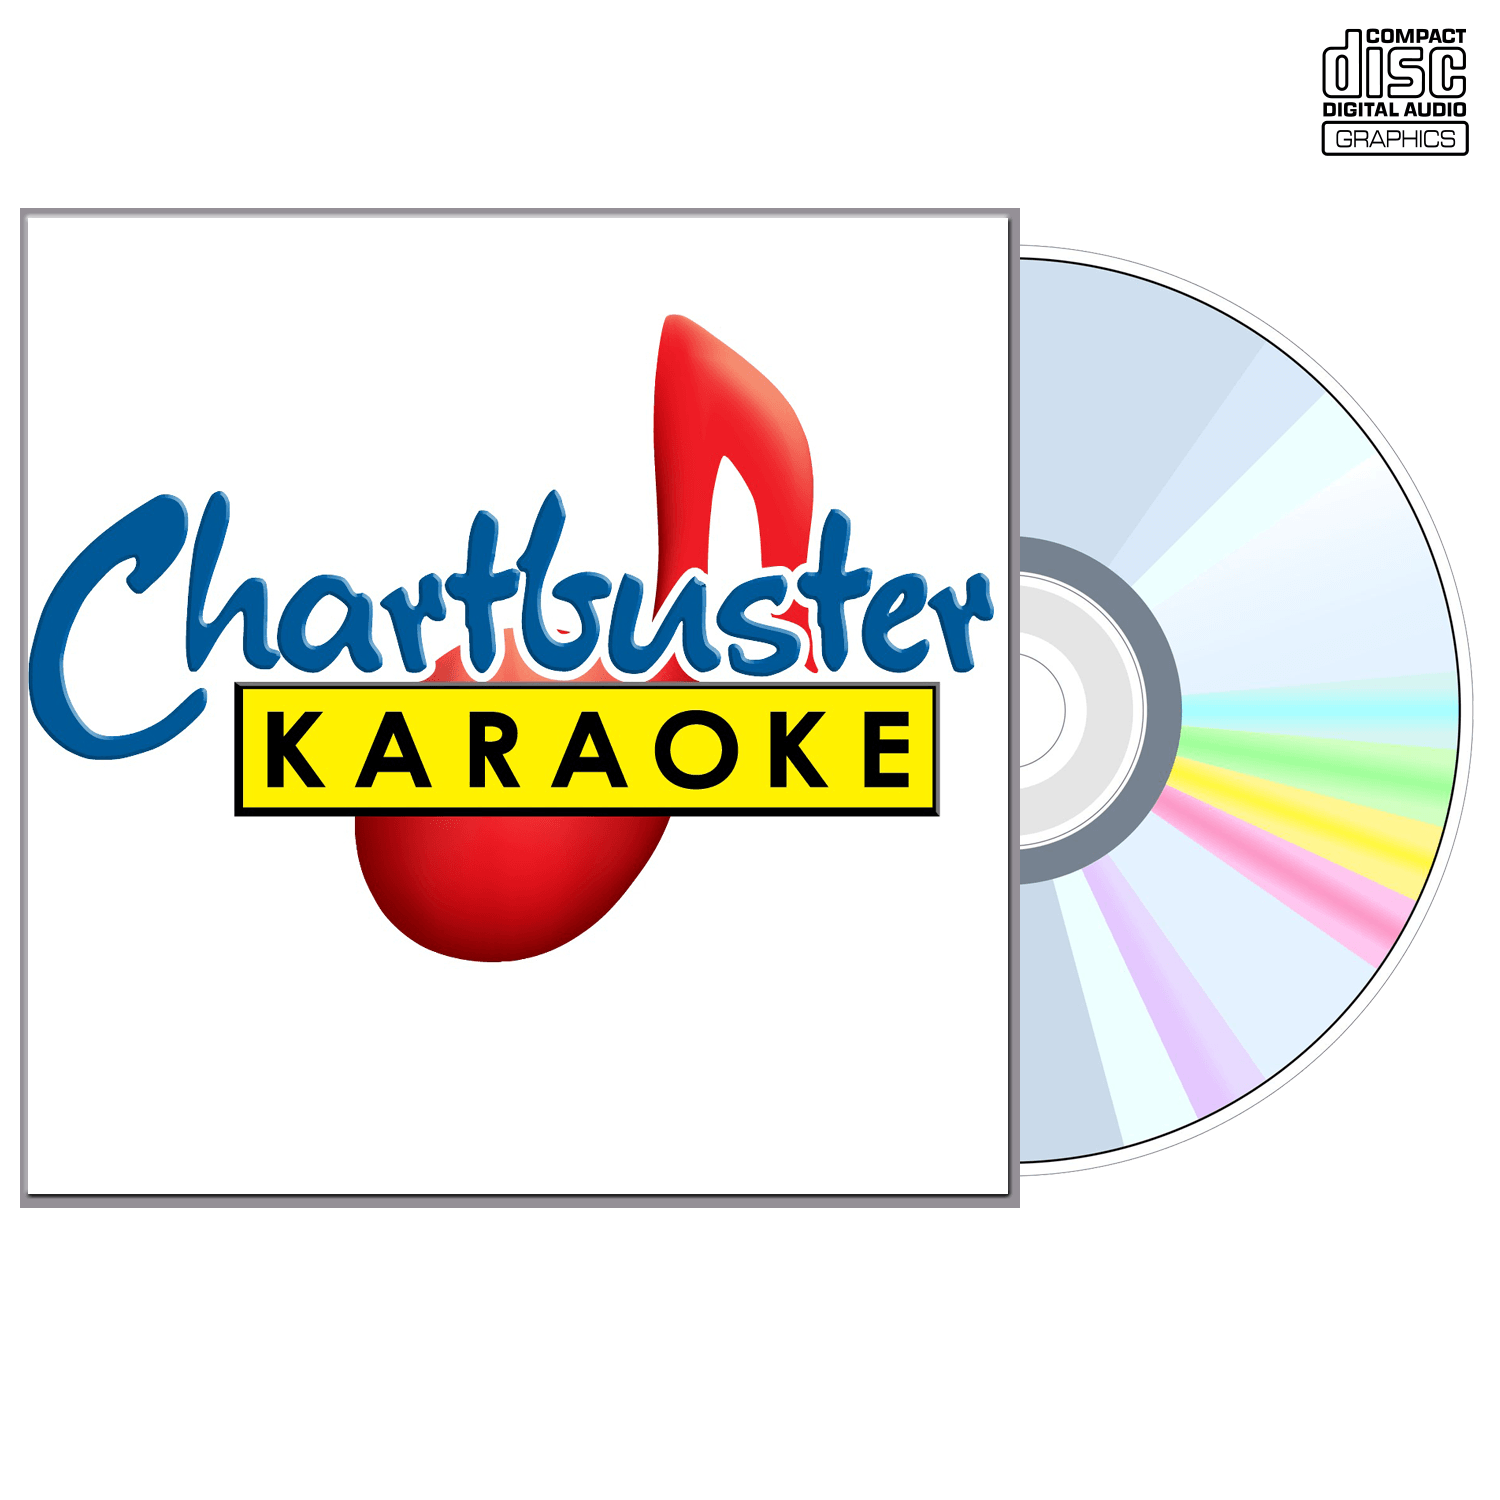 Bruce Springsteen - CD+G - Chartbuster Karaoke - Karaoke Home Entertainment